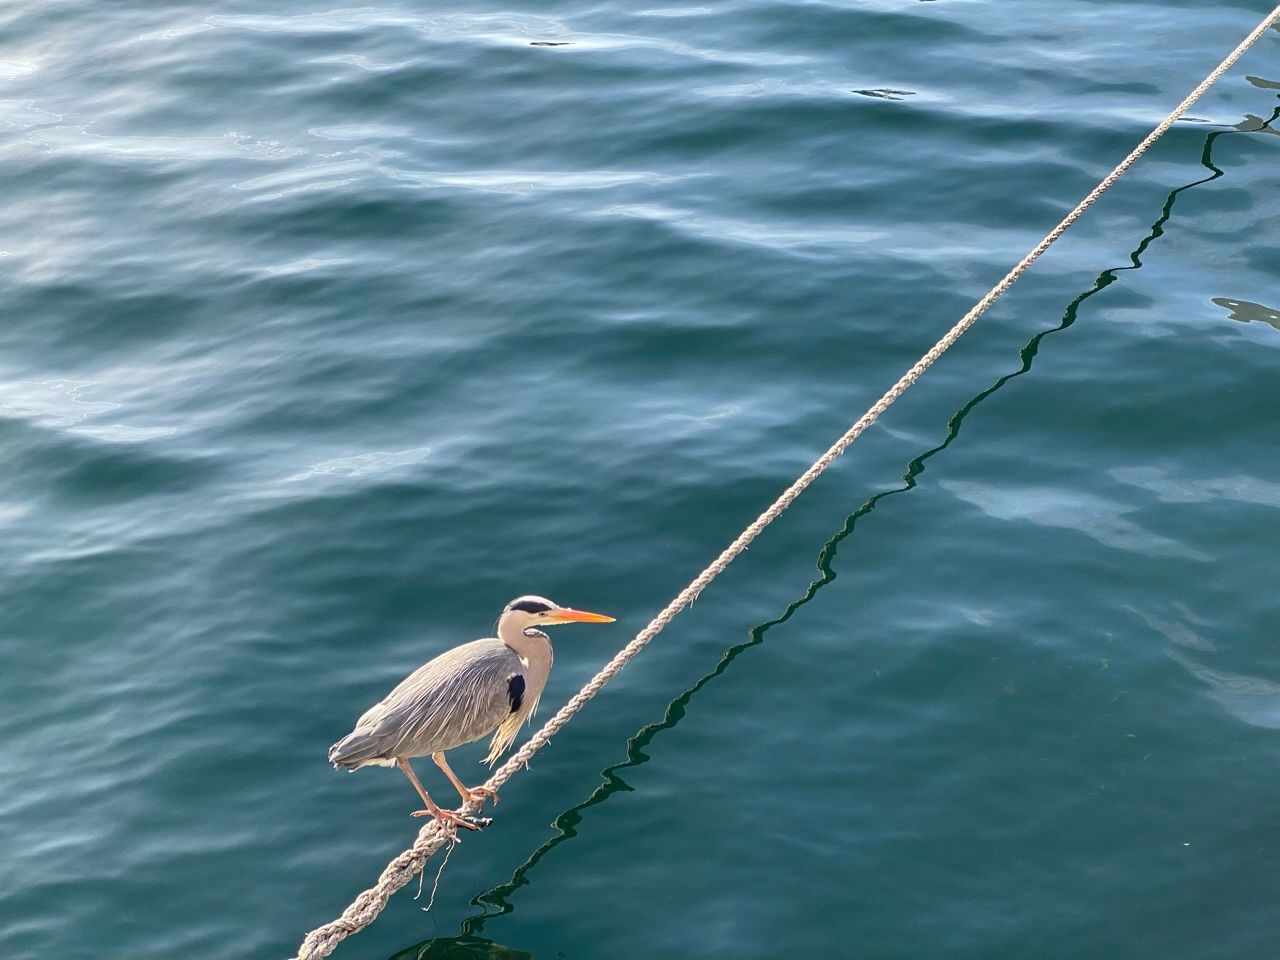 bird on a rope